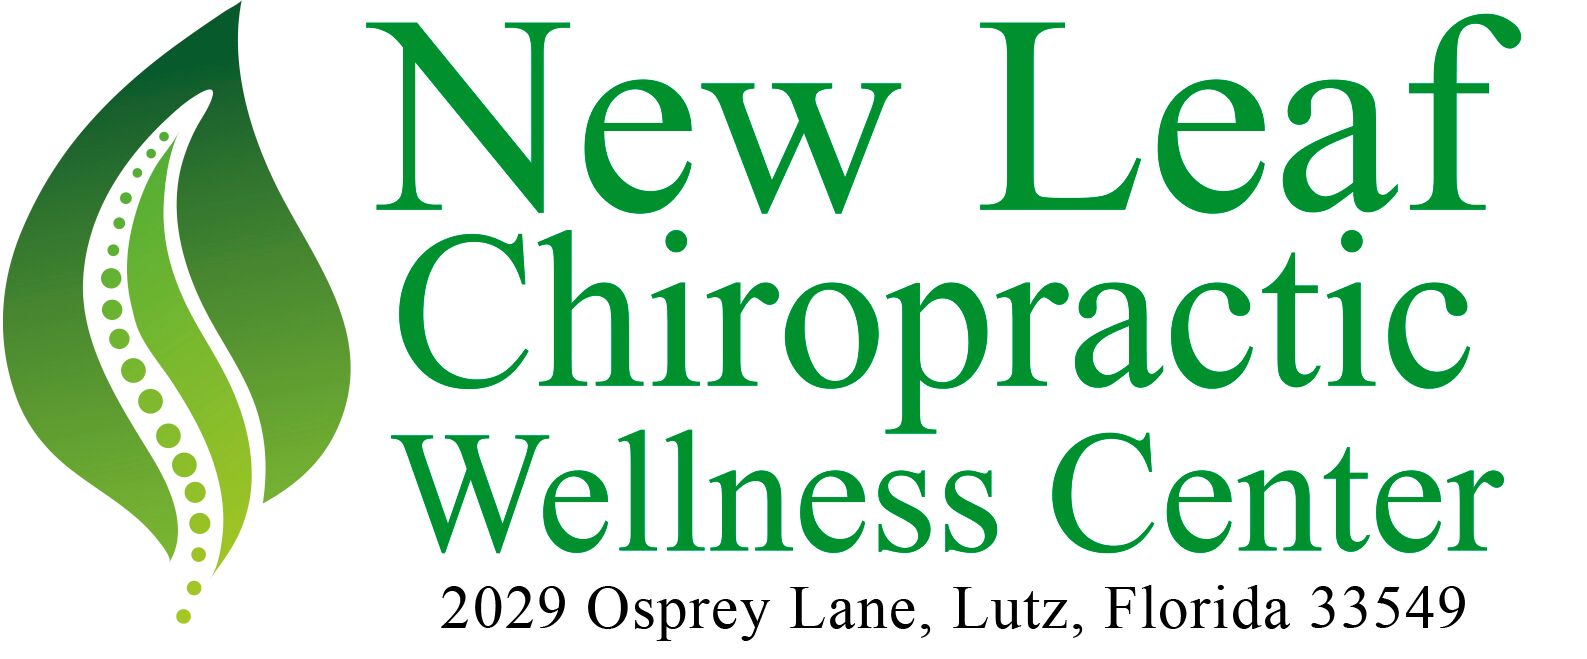 New Leaf Chiropractic Wellness Center